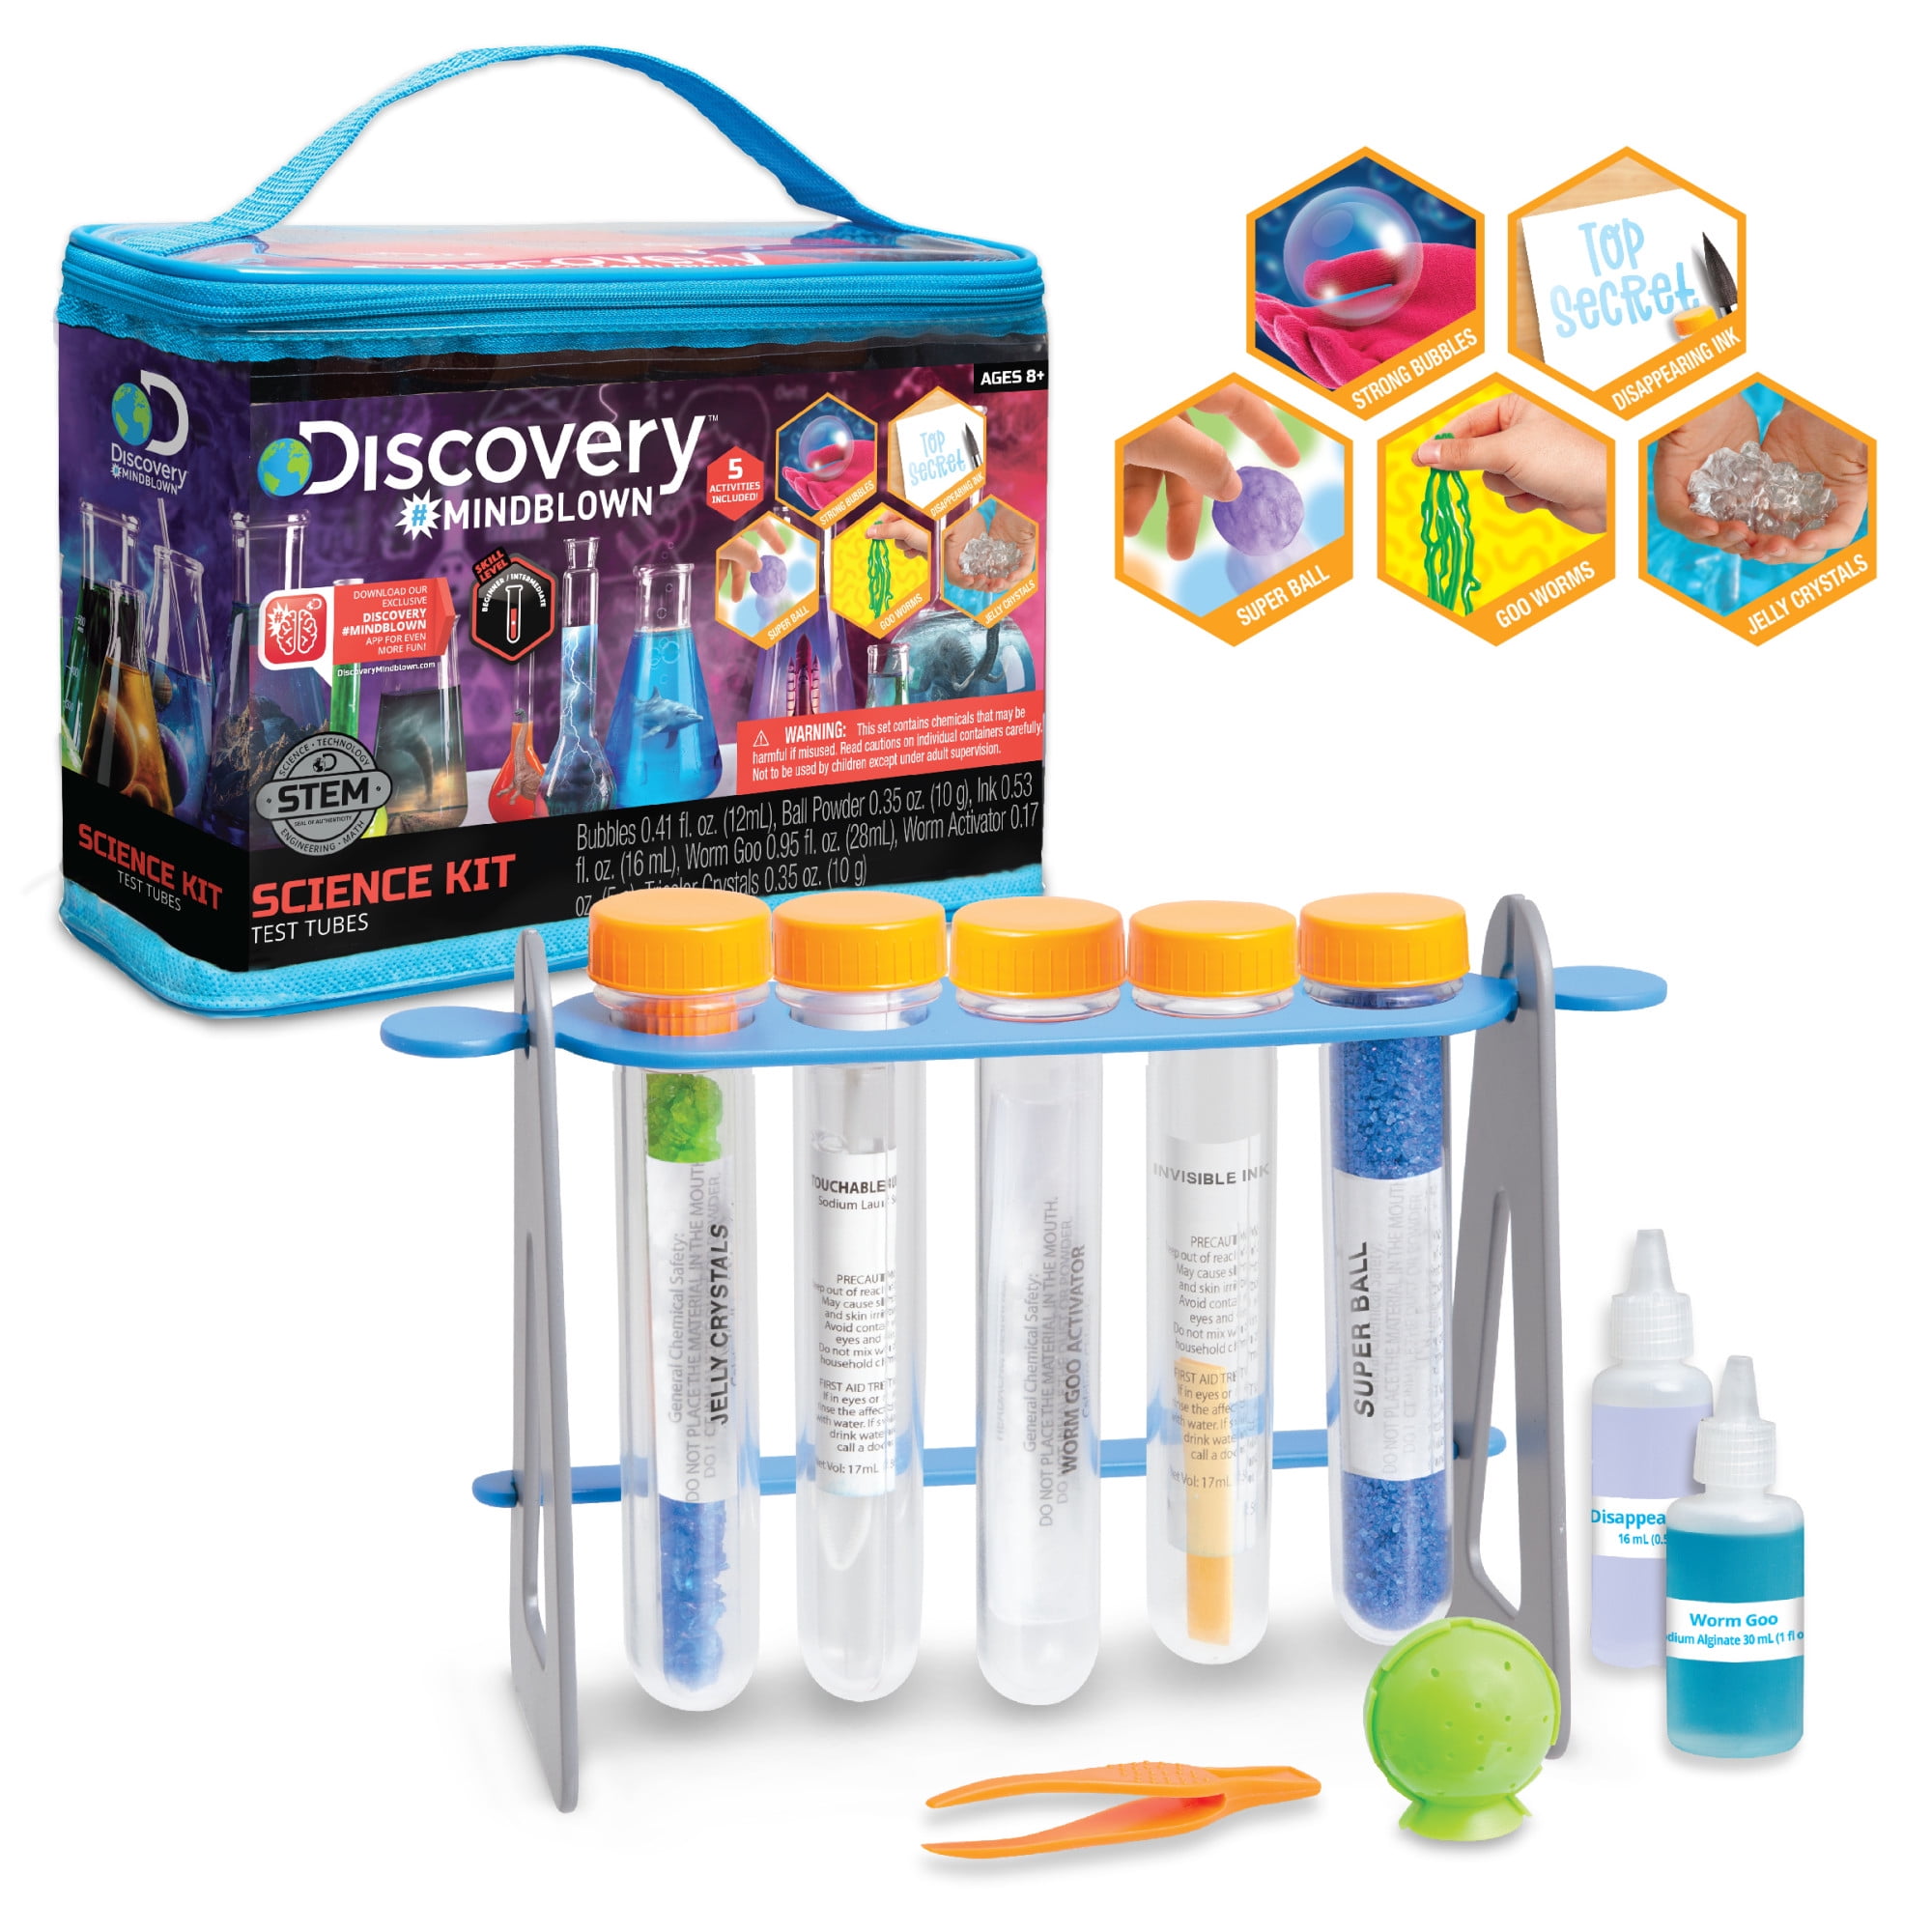 Discovery Kids Education Mindblown Rocket Launcher Science Experiment Kit STEM 